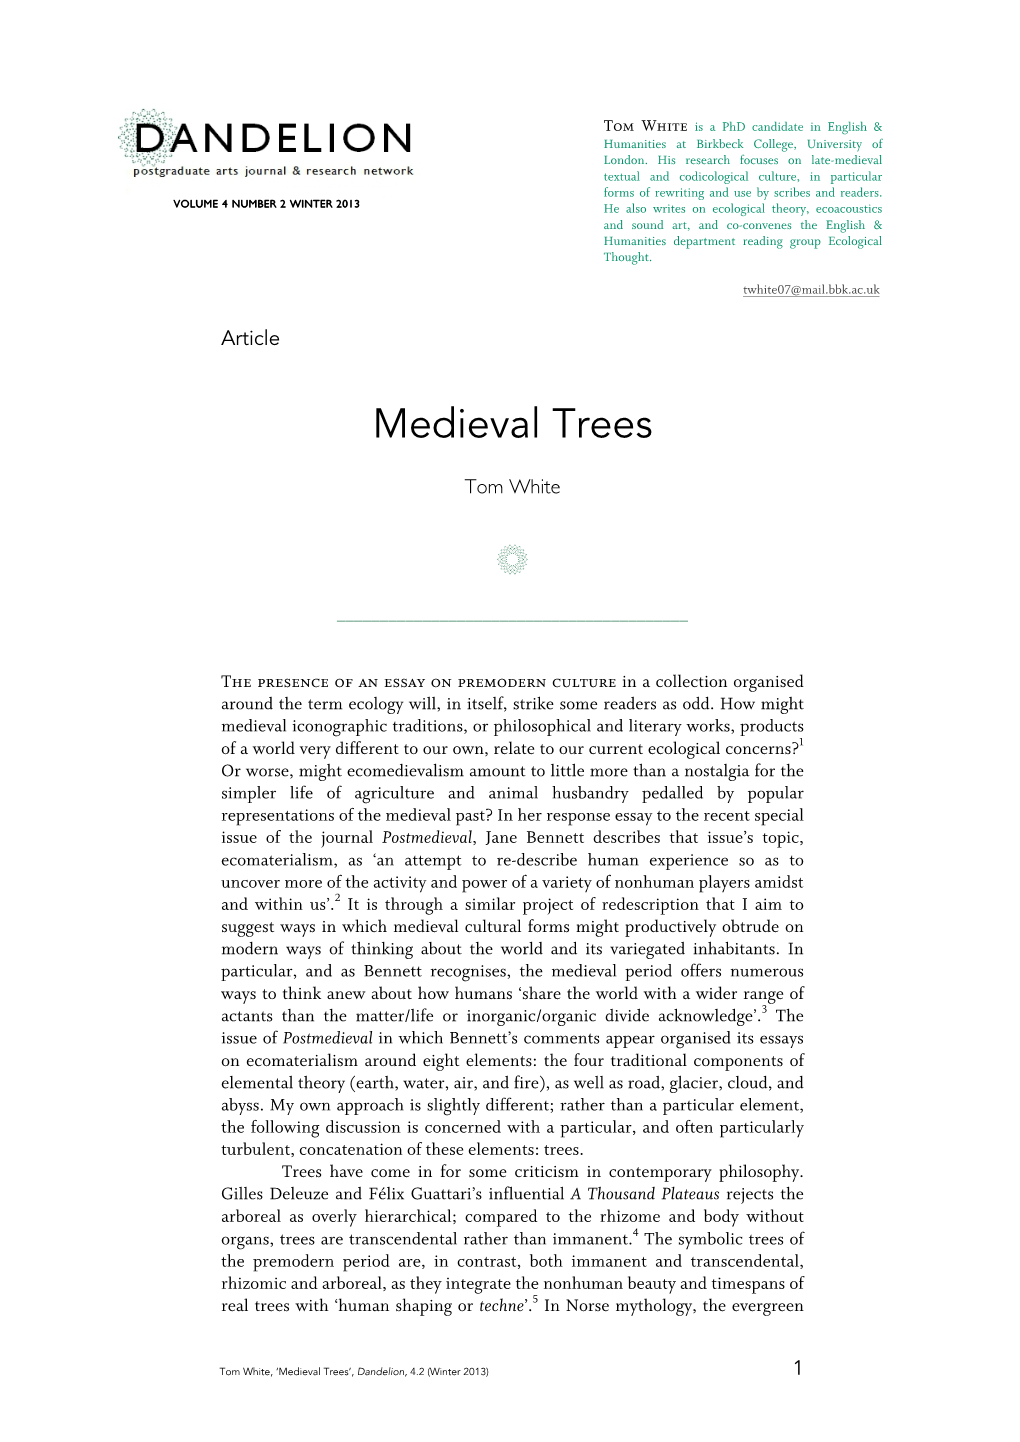 Medieval Trees